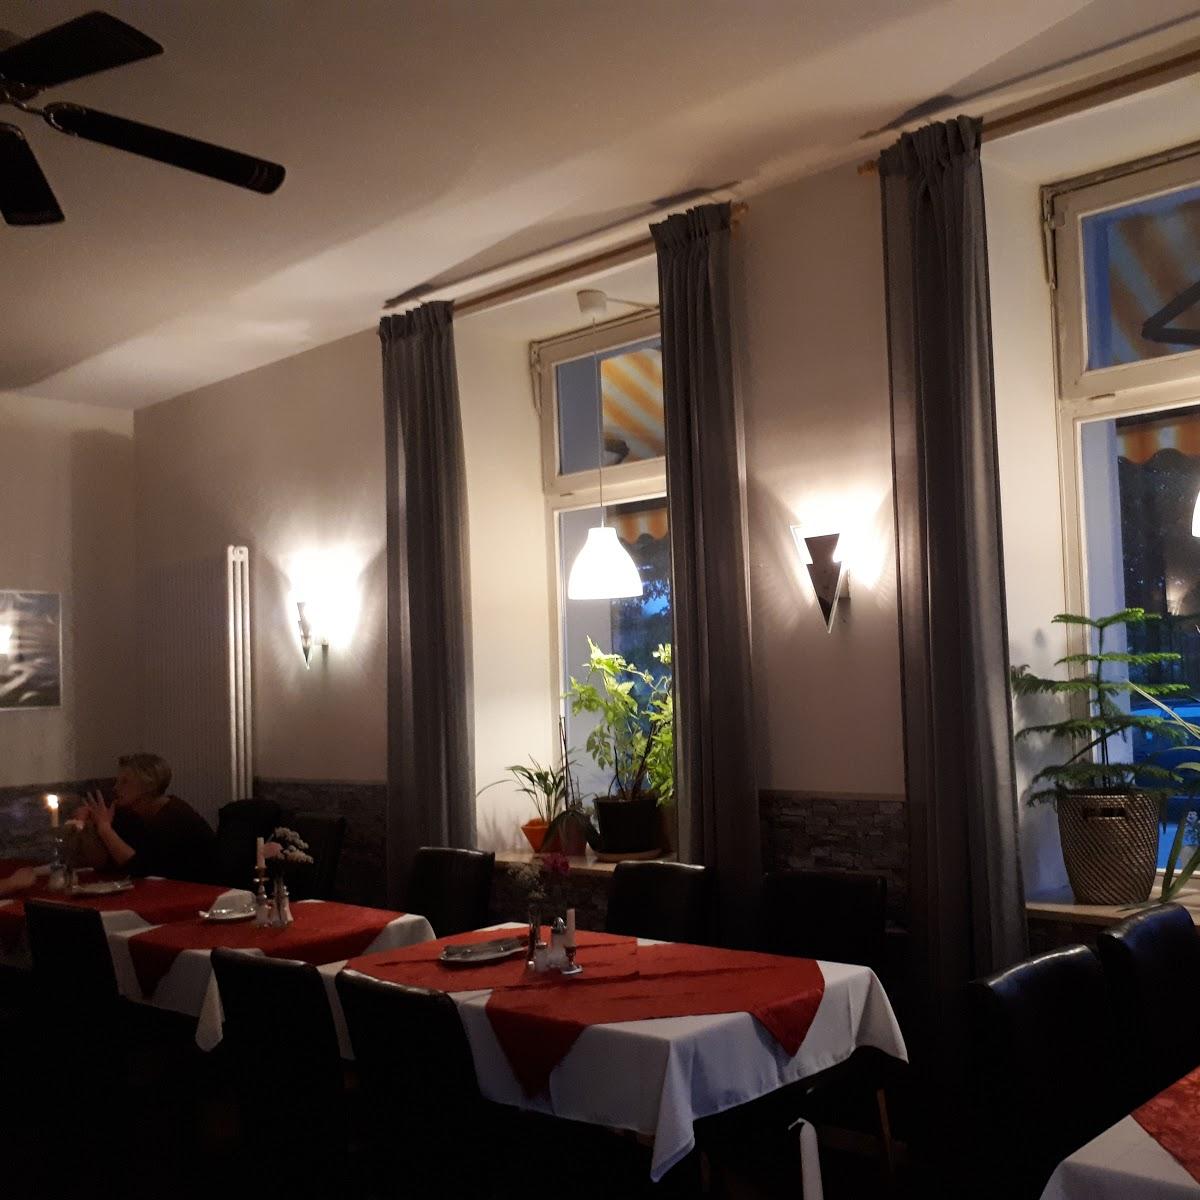 Restaurant "O Castelo" in München